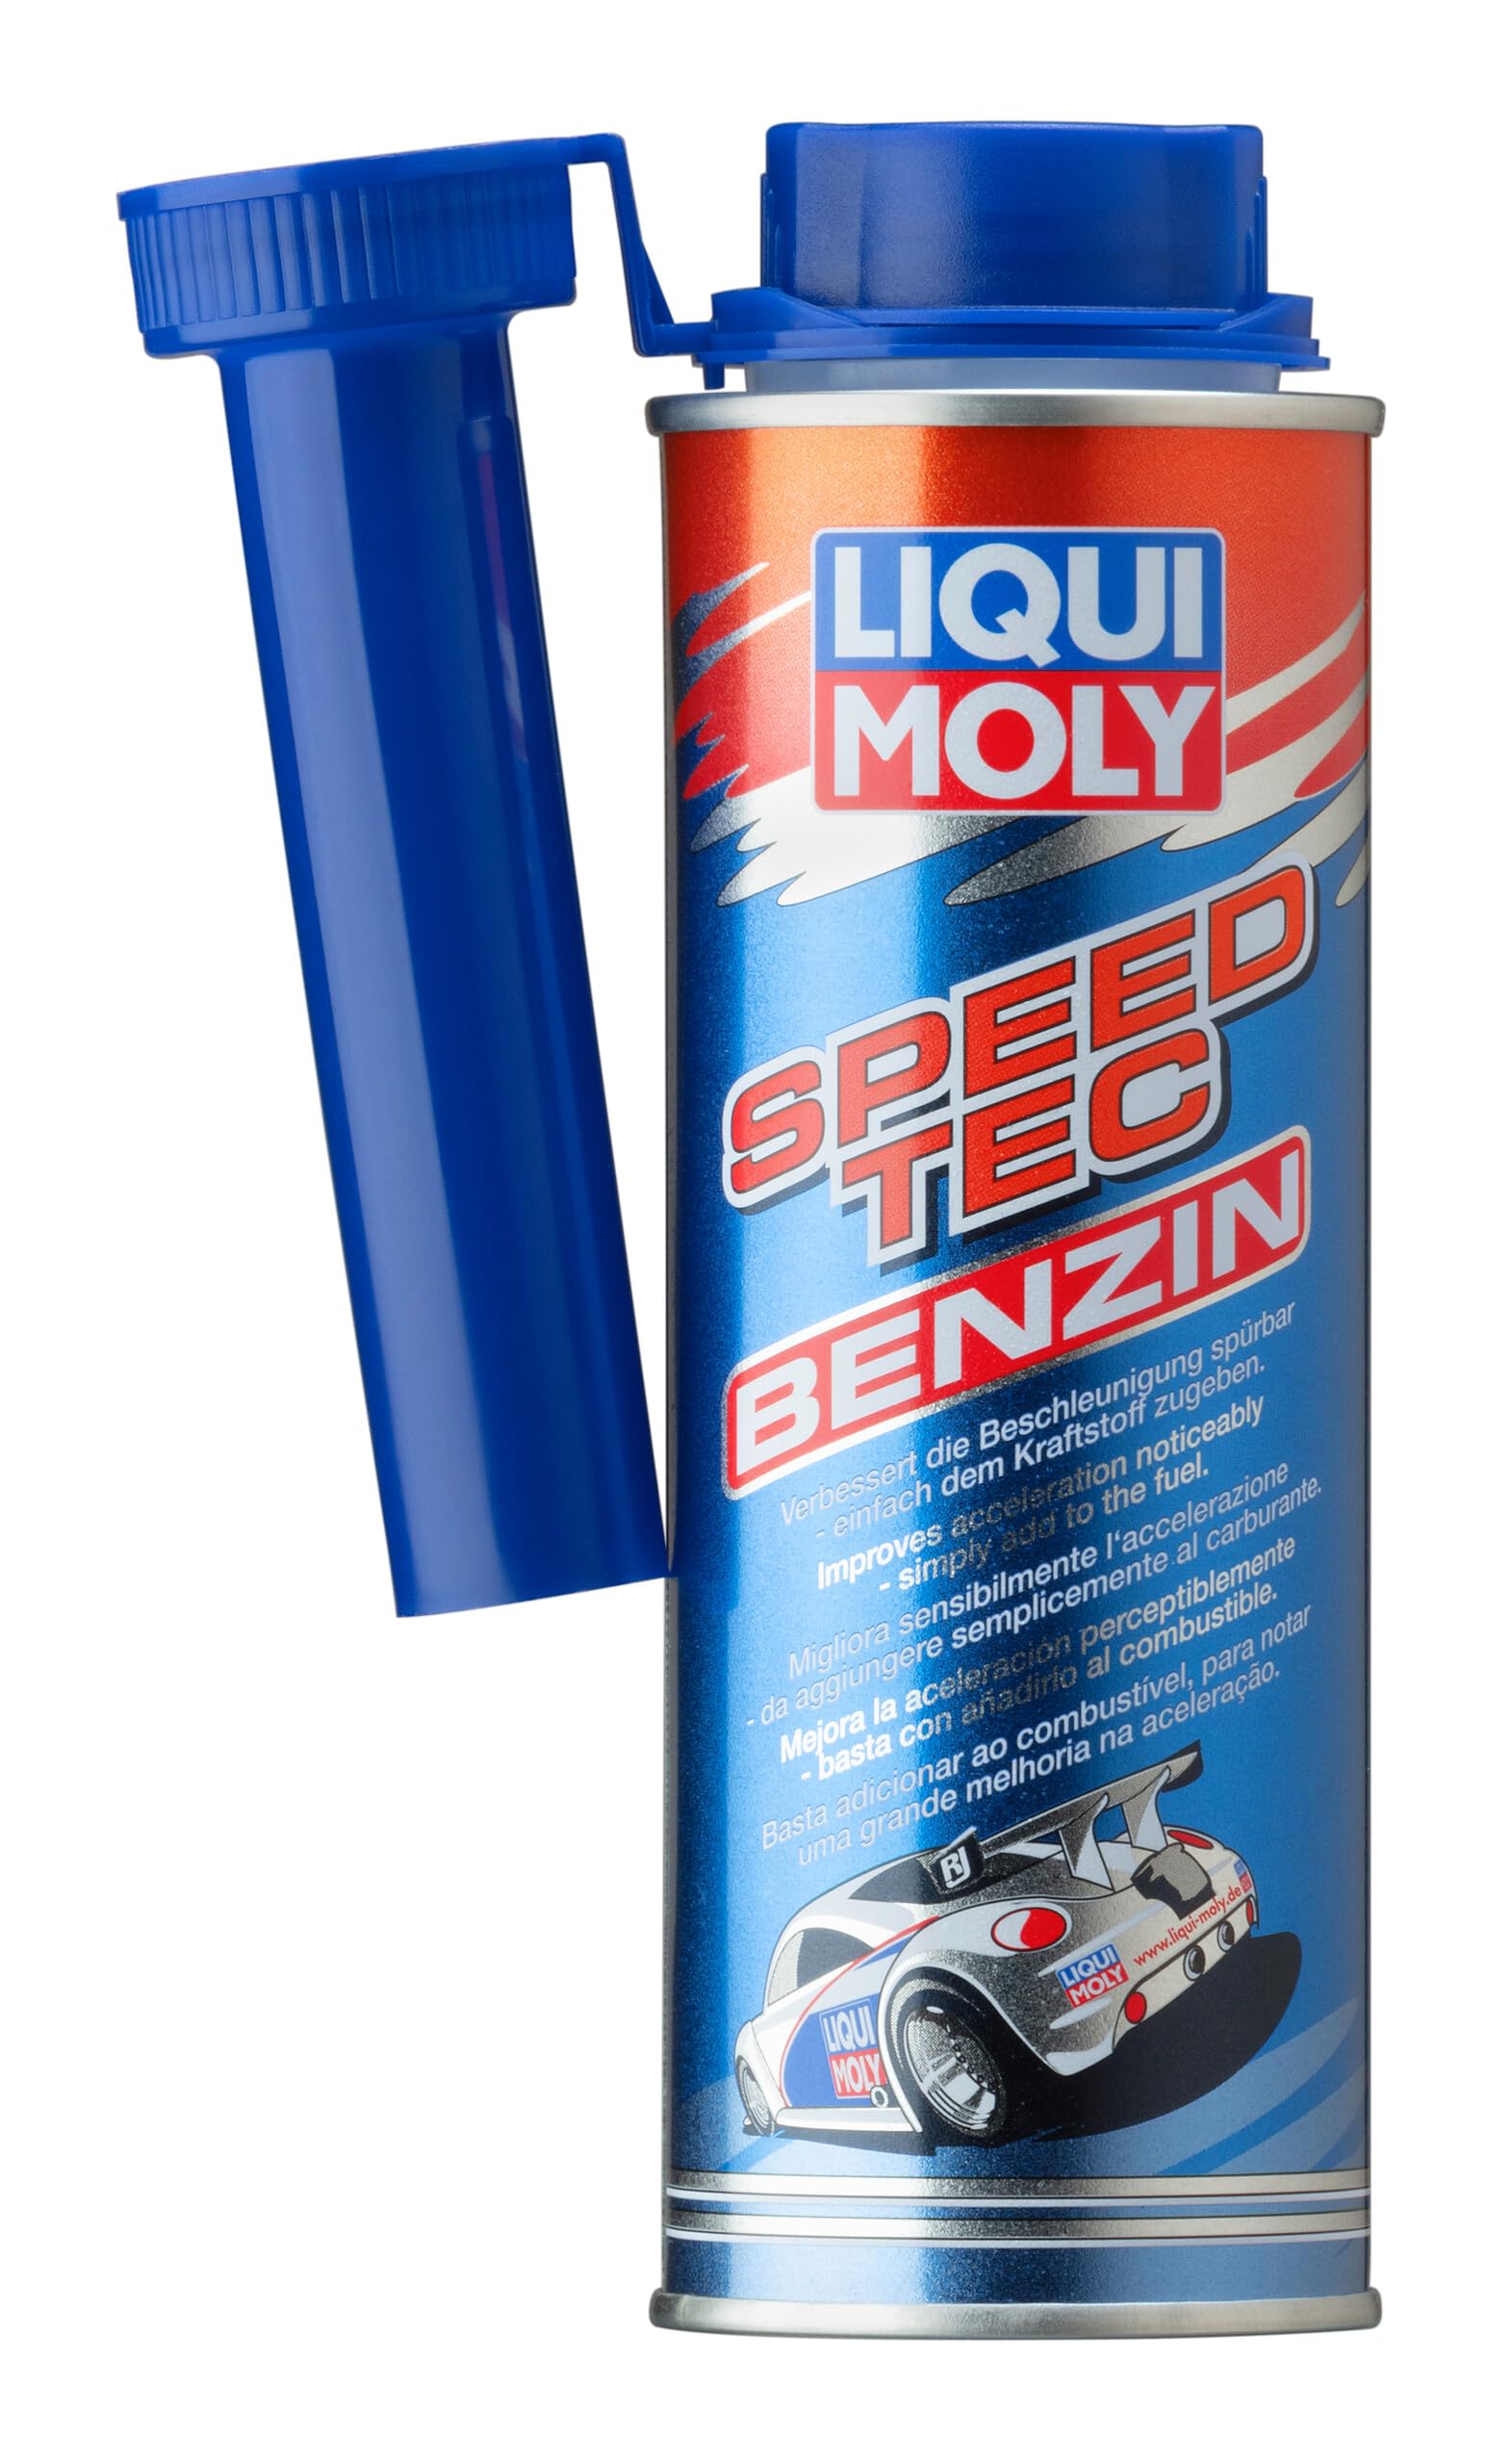 LIQUI MOLY Speed Tec Benzin | 250 ml | Benzinadditiv | Art.-Nr.: 3720, 1 Packung von Liqui Moly